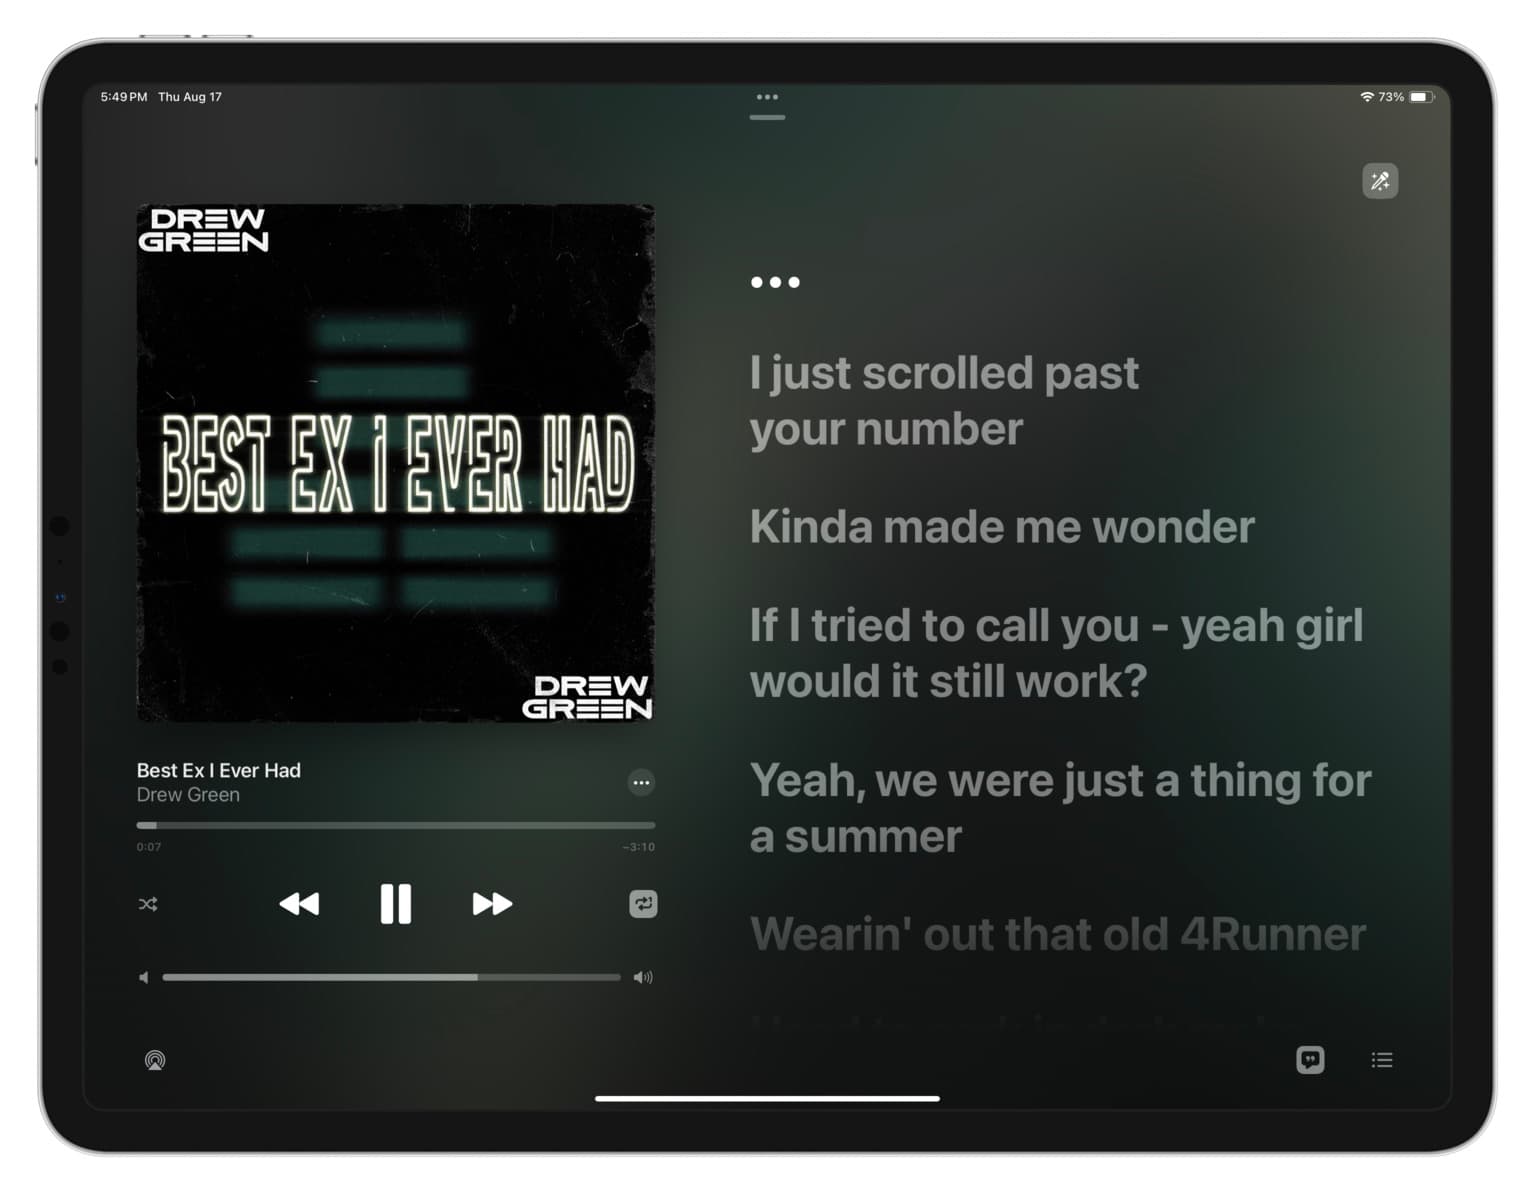 Apple Music lyrics and controls on iPad in landscape orientation